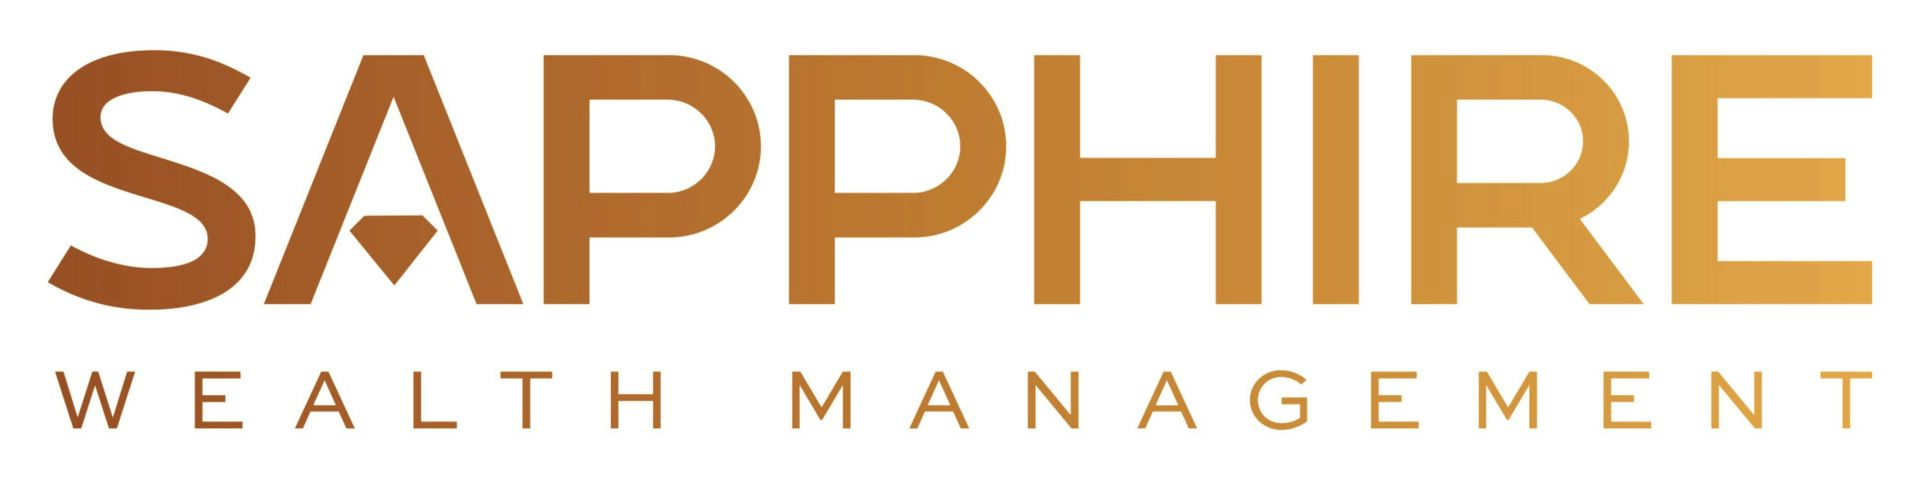 Sapphire Wealth Management Sponsorship